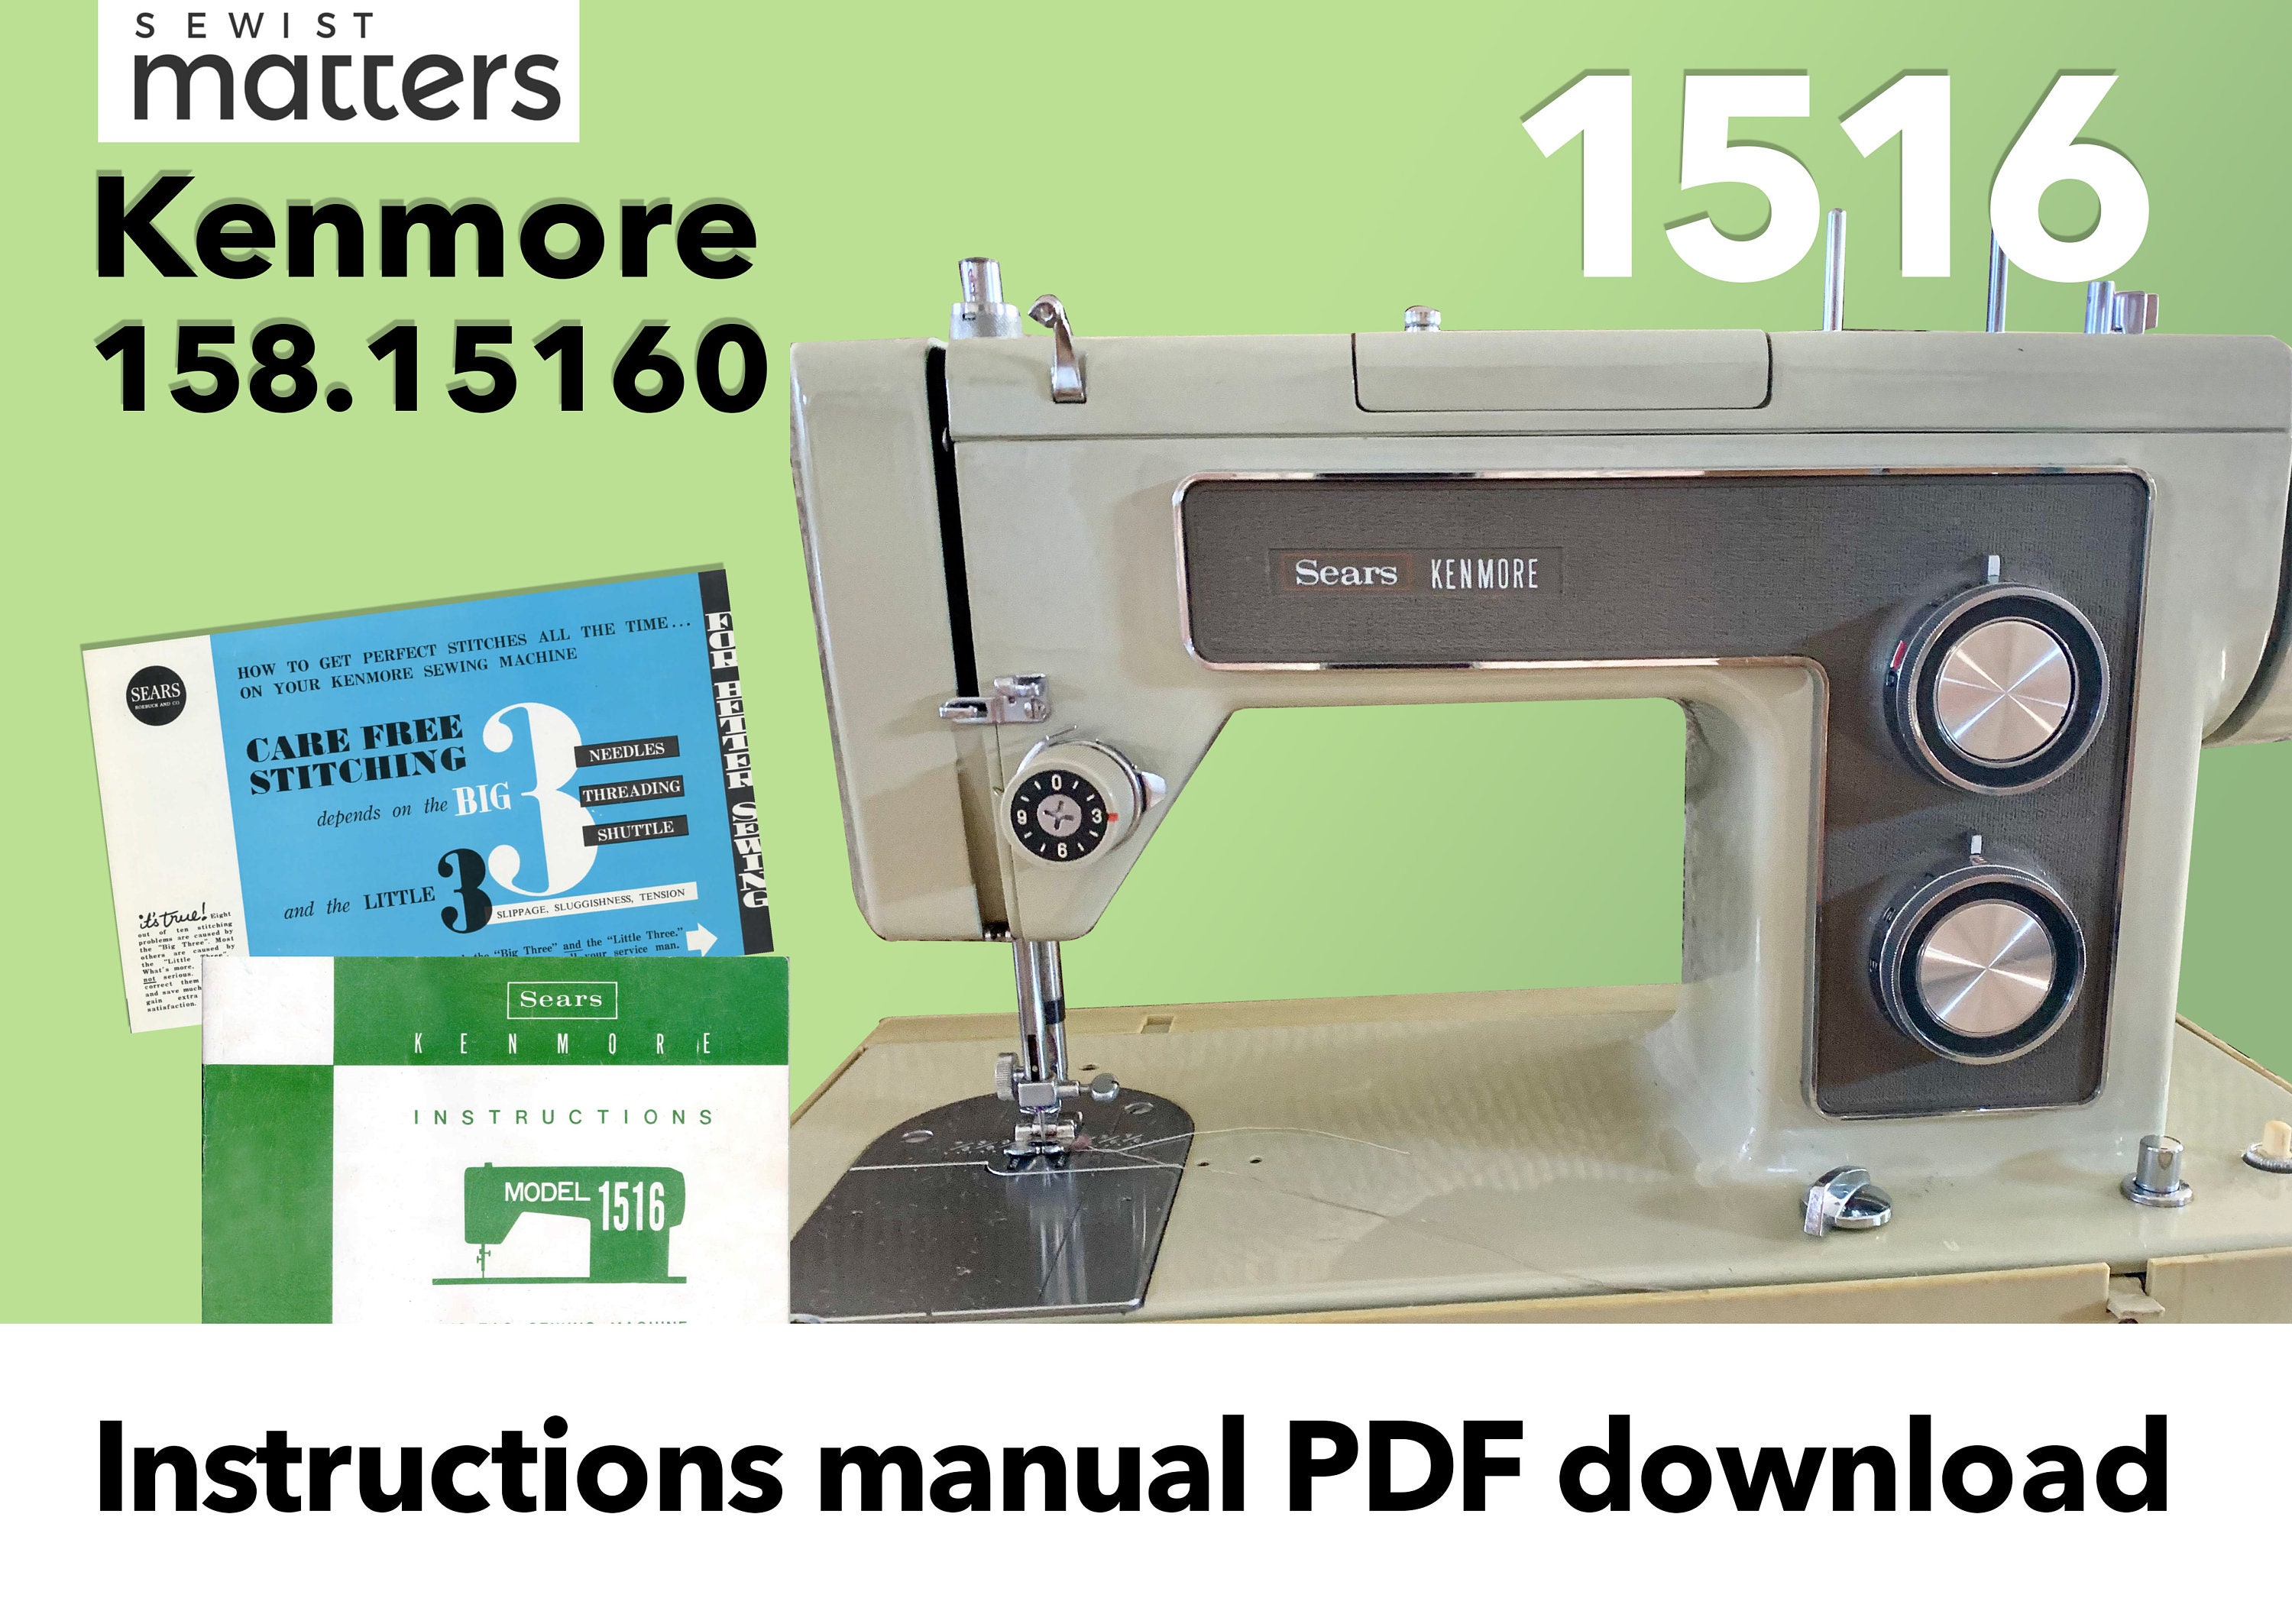 Kenmore 1201 1204 1205 1213 1214 1215 Zig-zag Sewing Machine Instruction  Manual PDF Download 